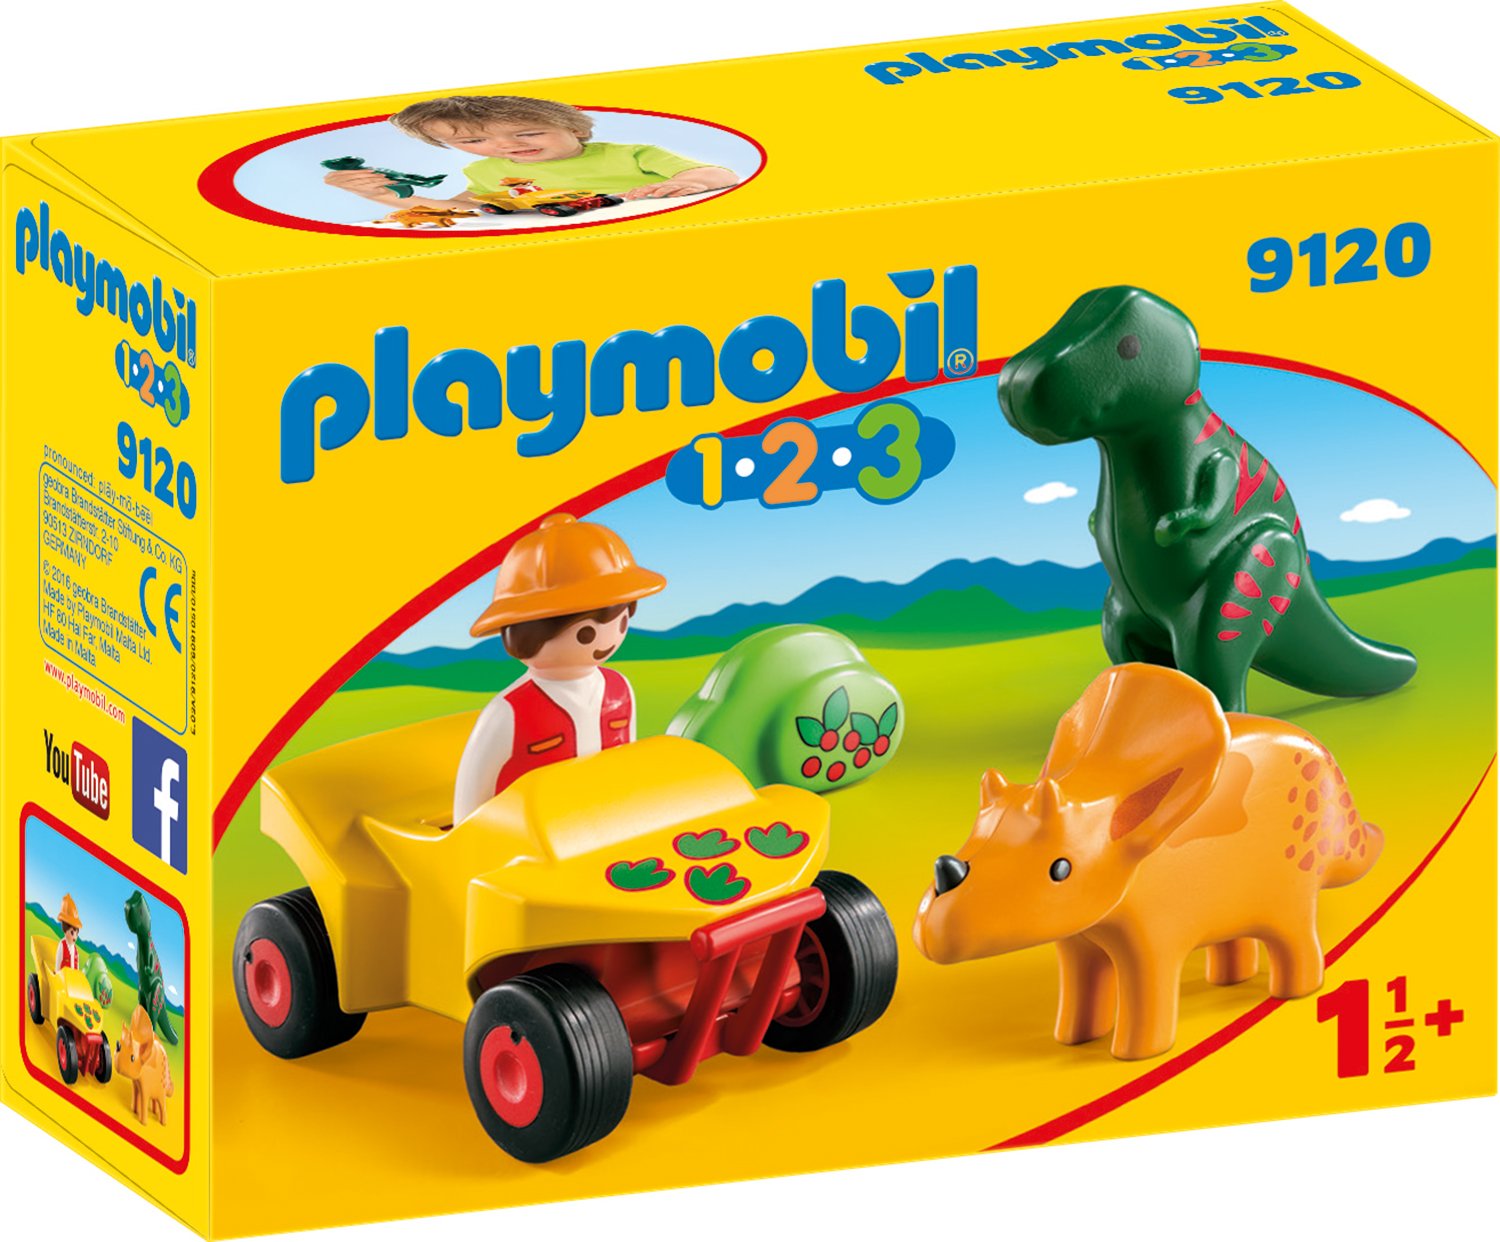 Playmobil Explorer With Dinosaurs